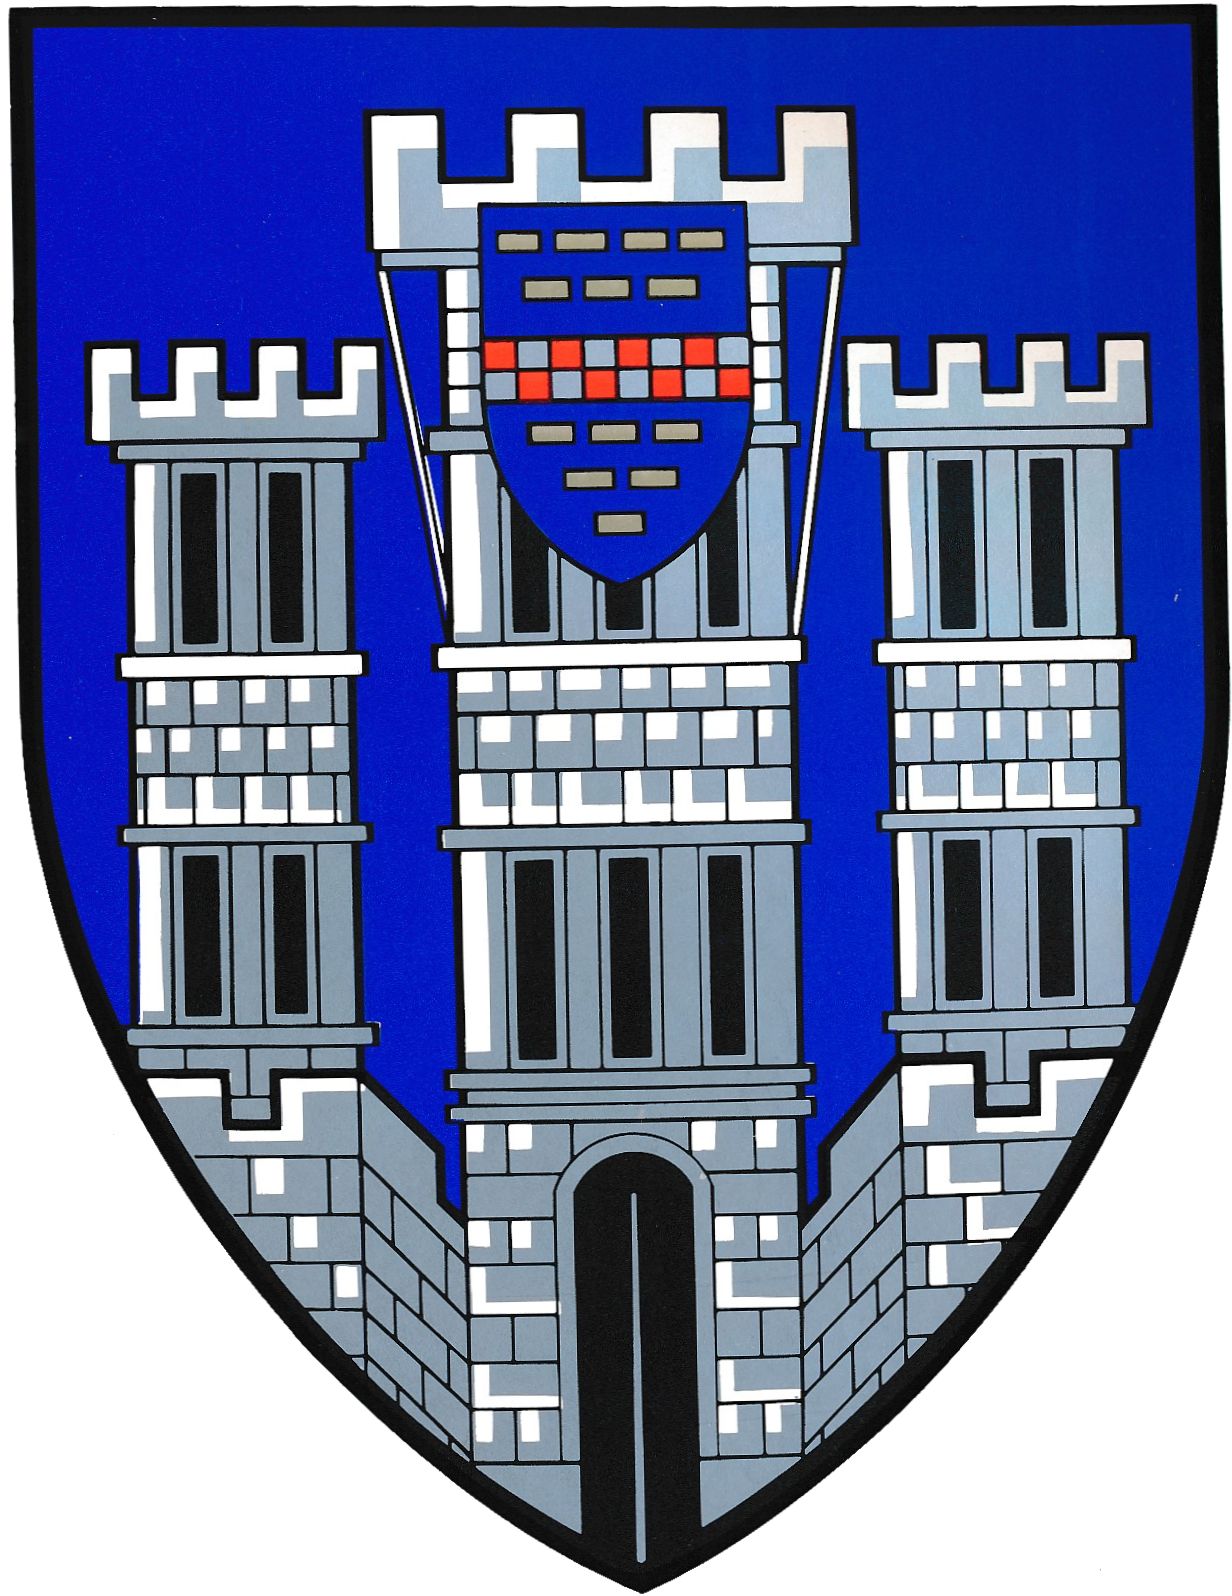 Wappen von Limburg an der Lahn / Arms of Limburg an der Lahn